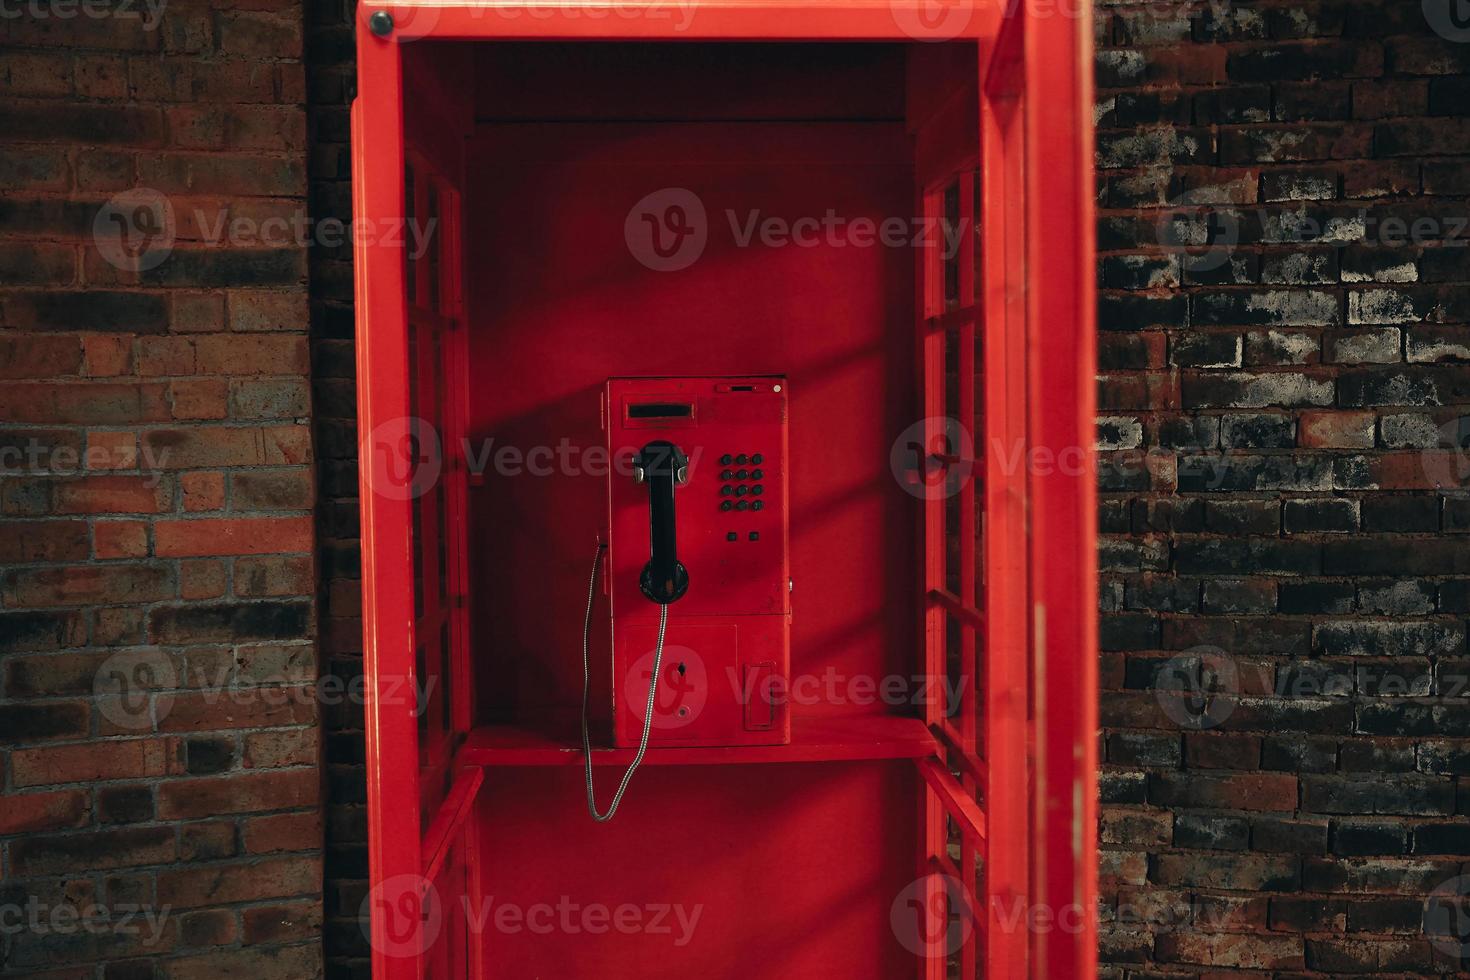 gamla skolan röd telefonautomat inuti vintage röd telefonkiosk foto